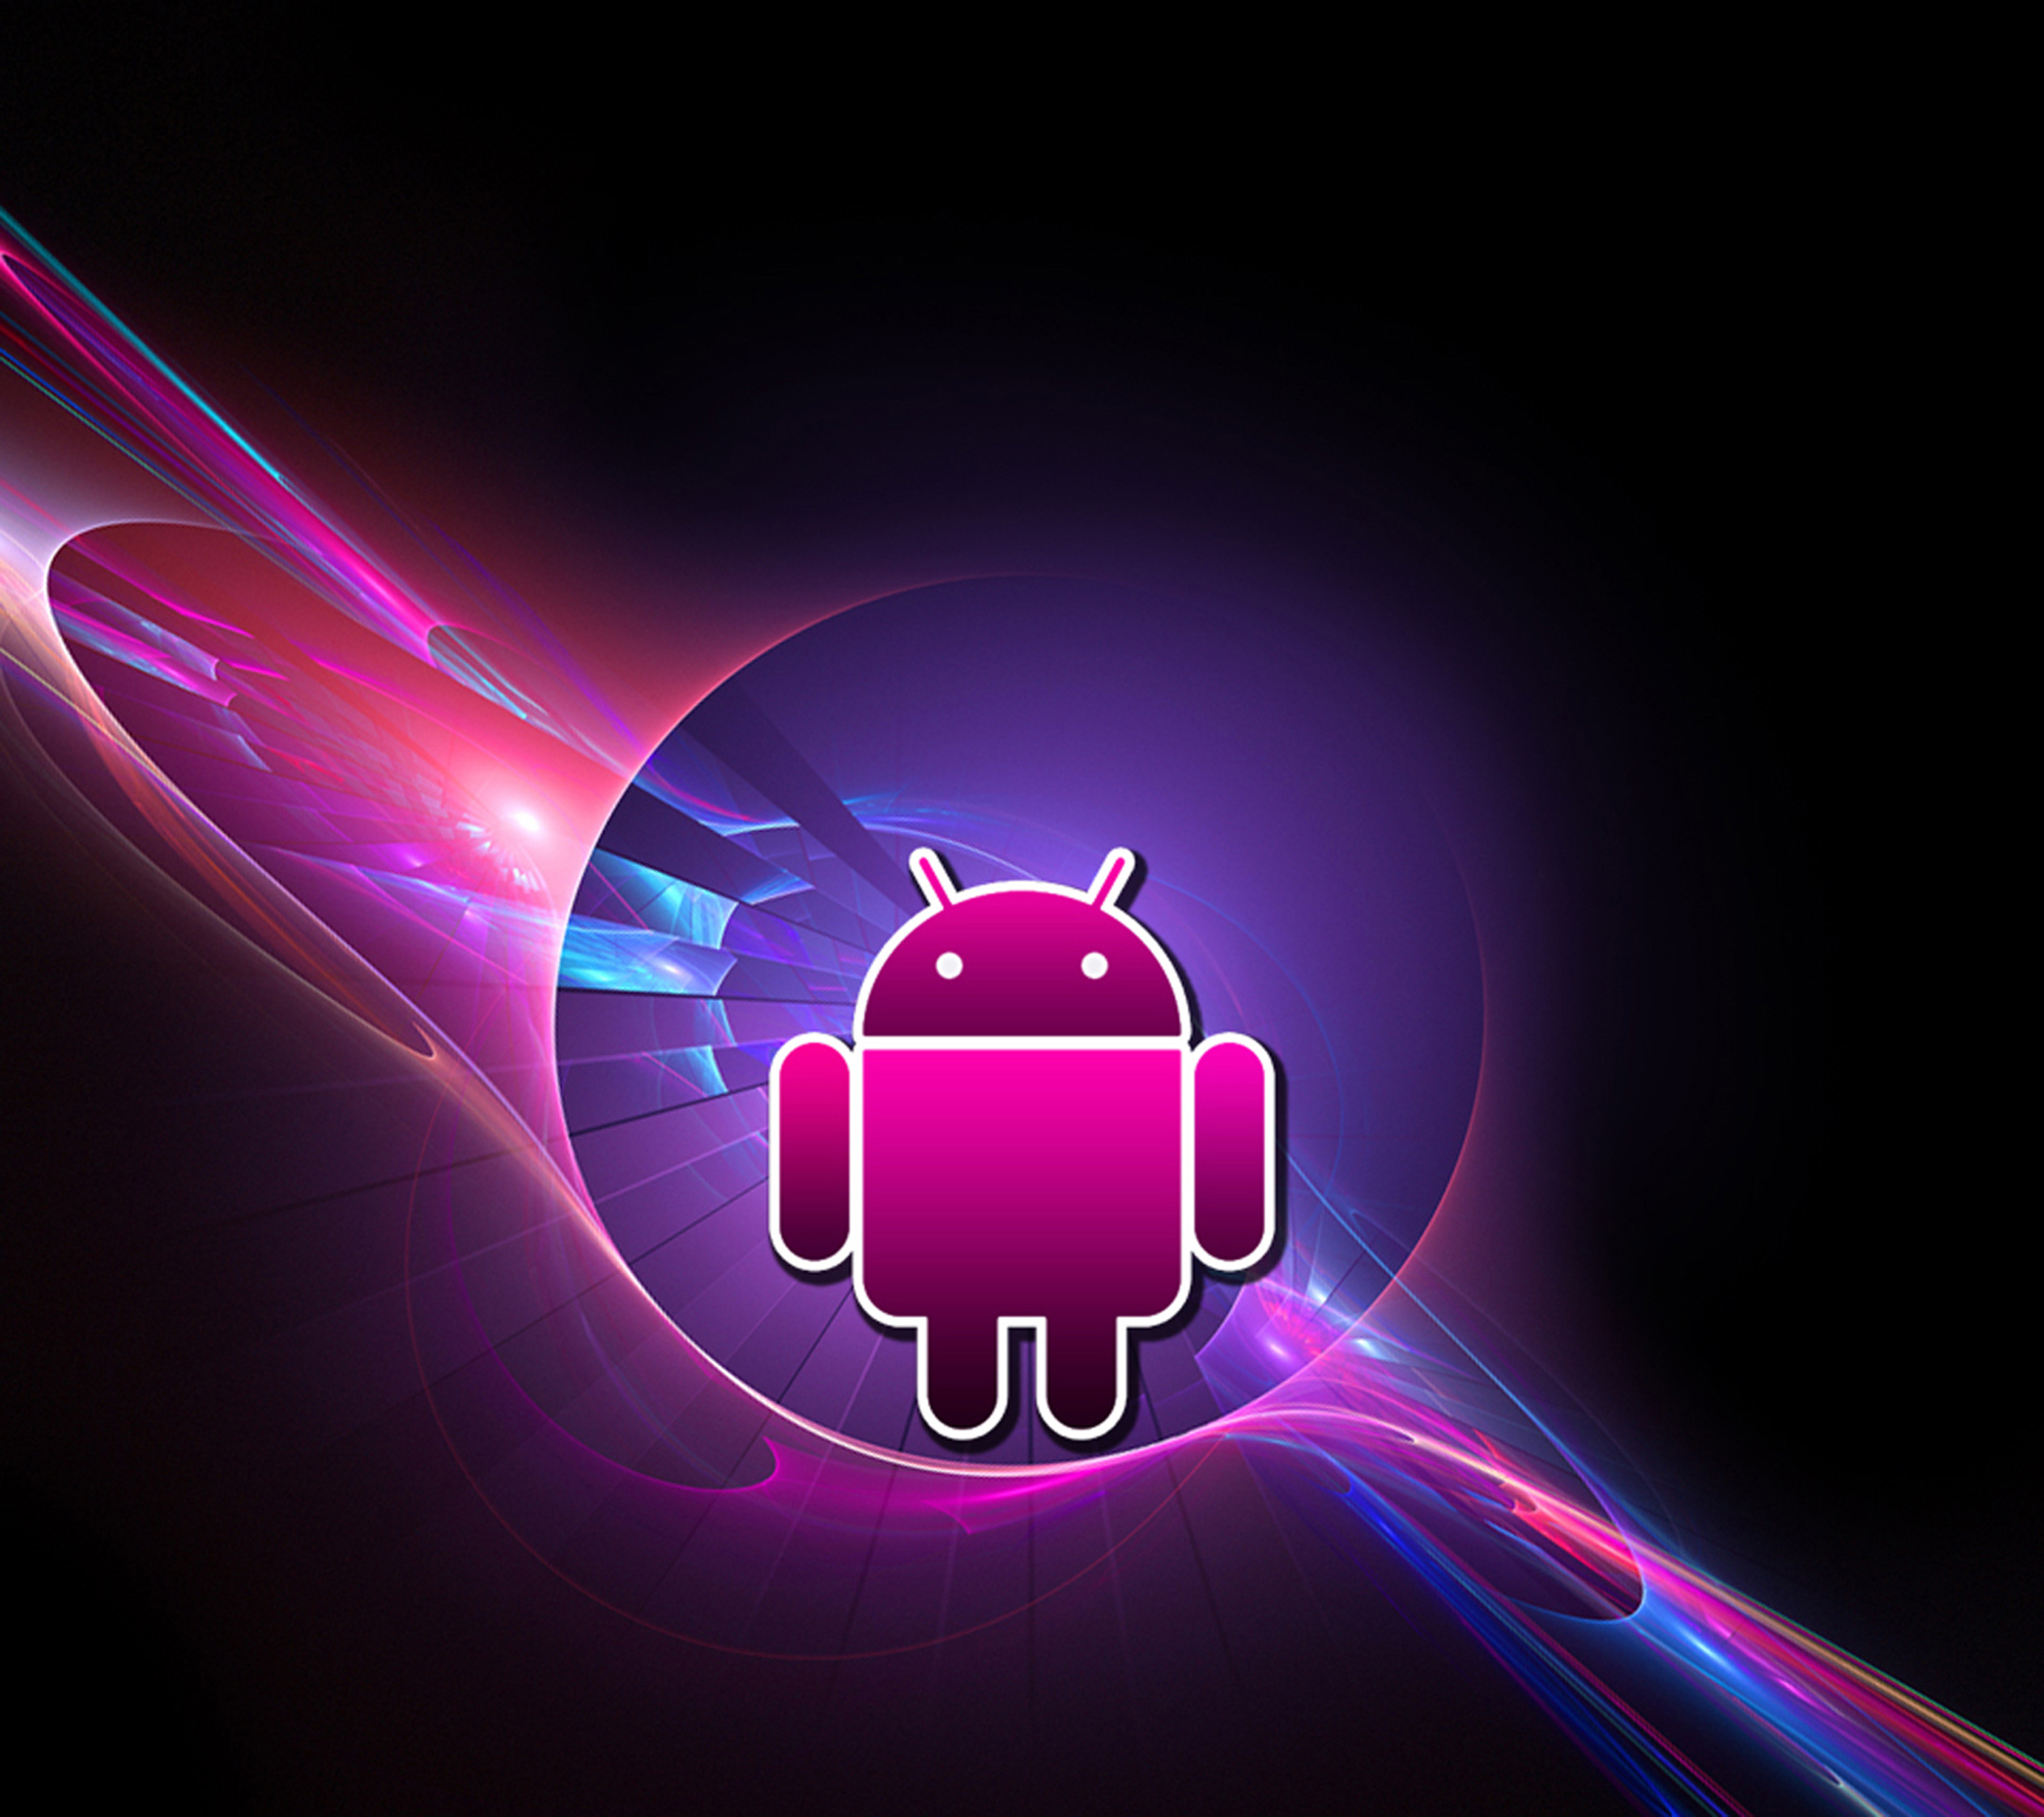 Продвинутый андроид. Логотип андроид. Розовый андроид. Заставка на андроид. Красивый андроид.